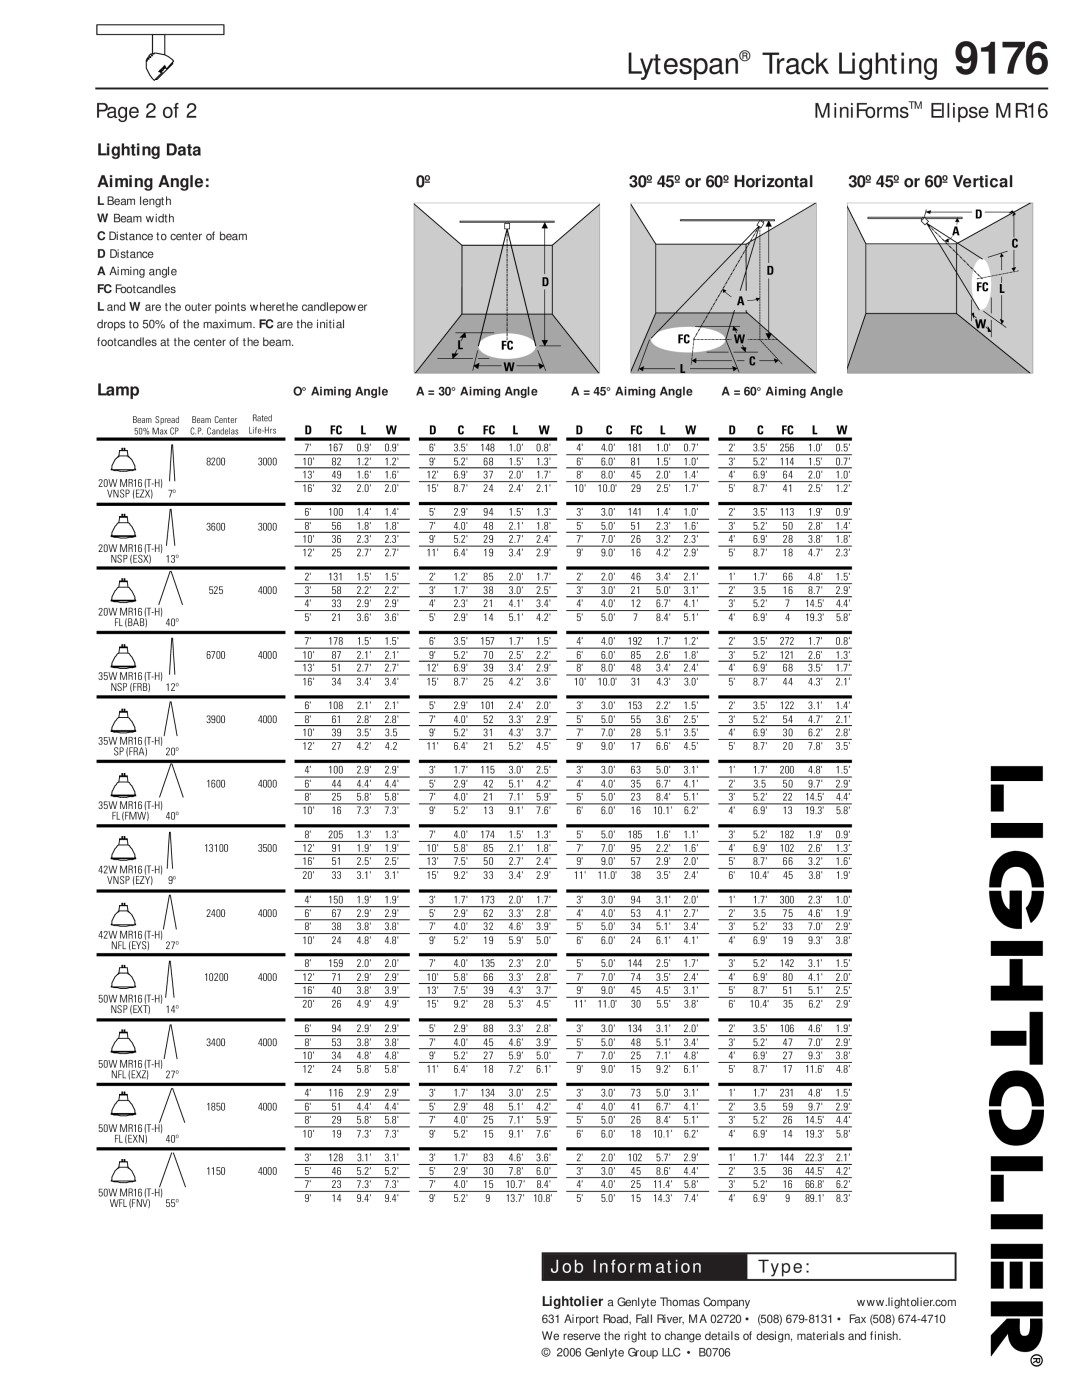 Lightolier 9176 Page 2 of, Lighting Data, Lamp, A = 60 Aiming Angle, Lytespan Track Lighting, Job Information, Type 